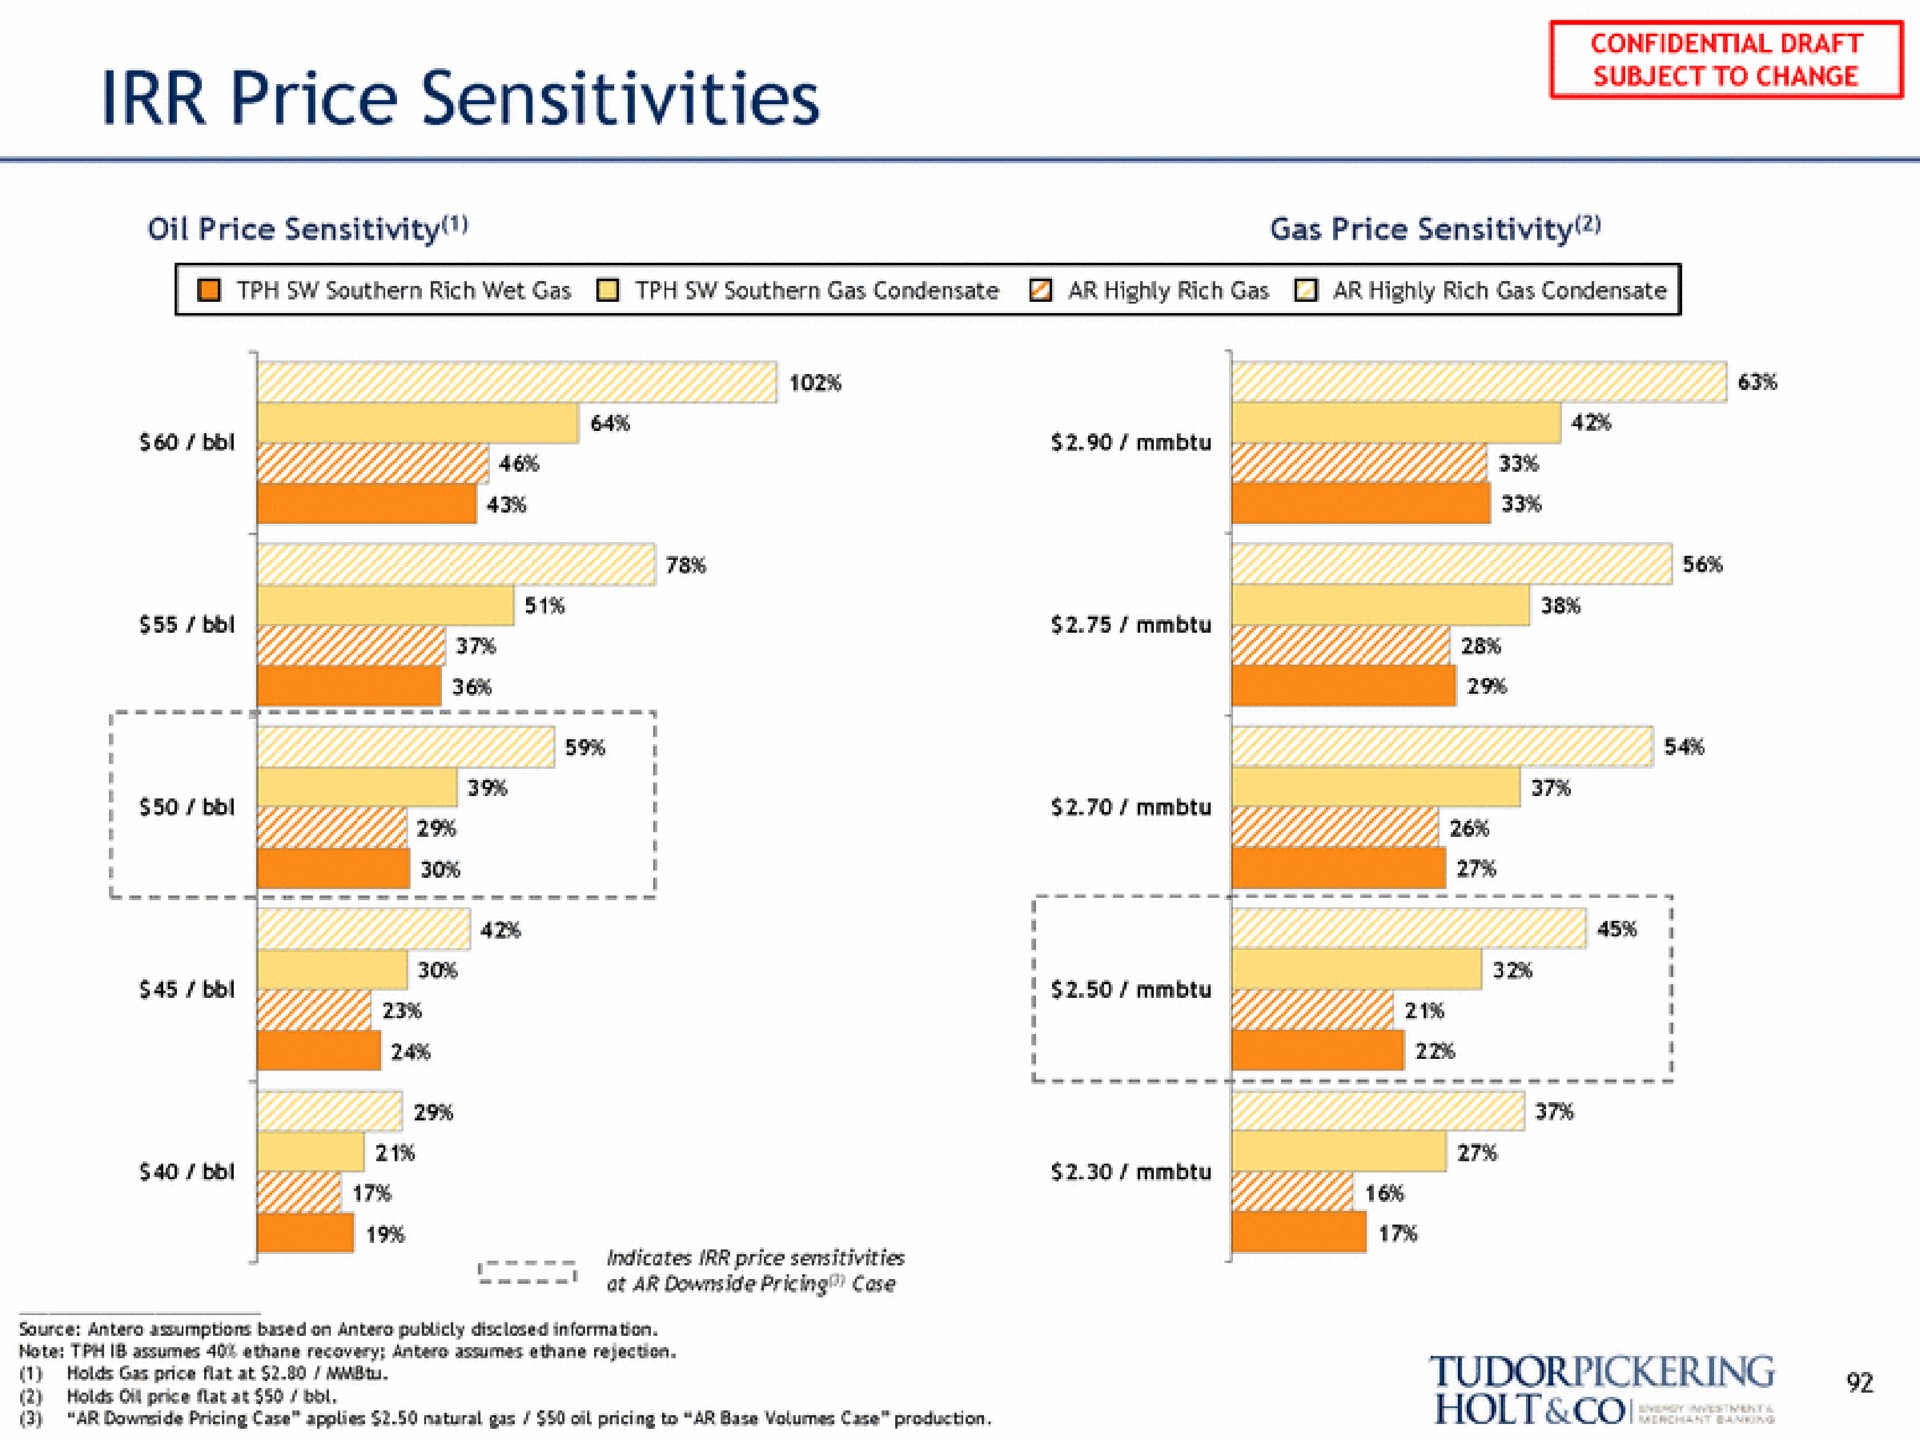 price sensitivities | Tudor, Pickering, Holt & Co